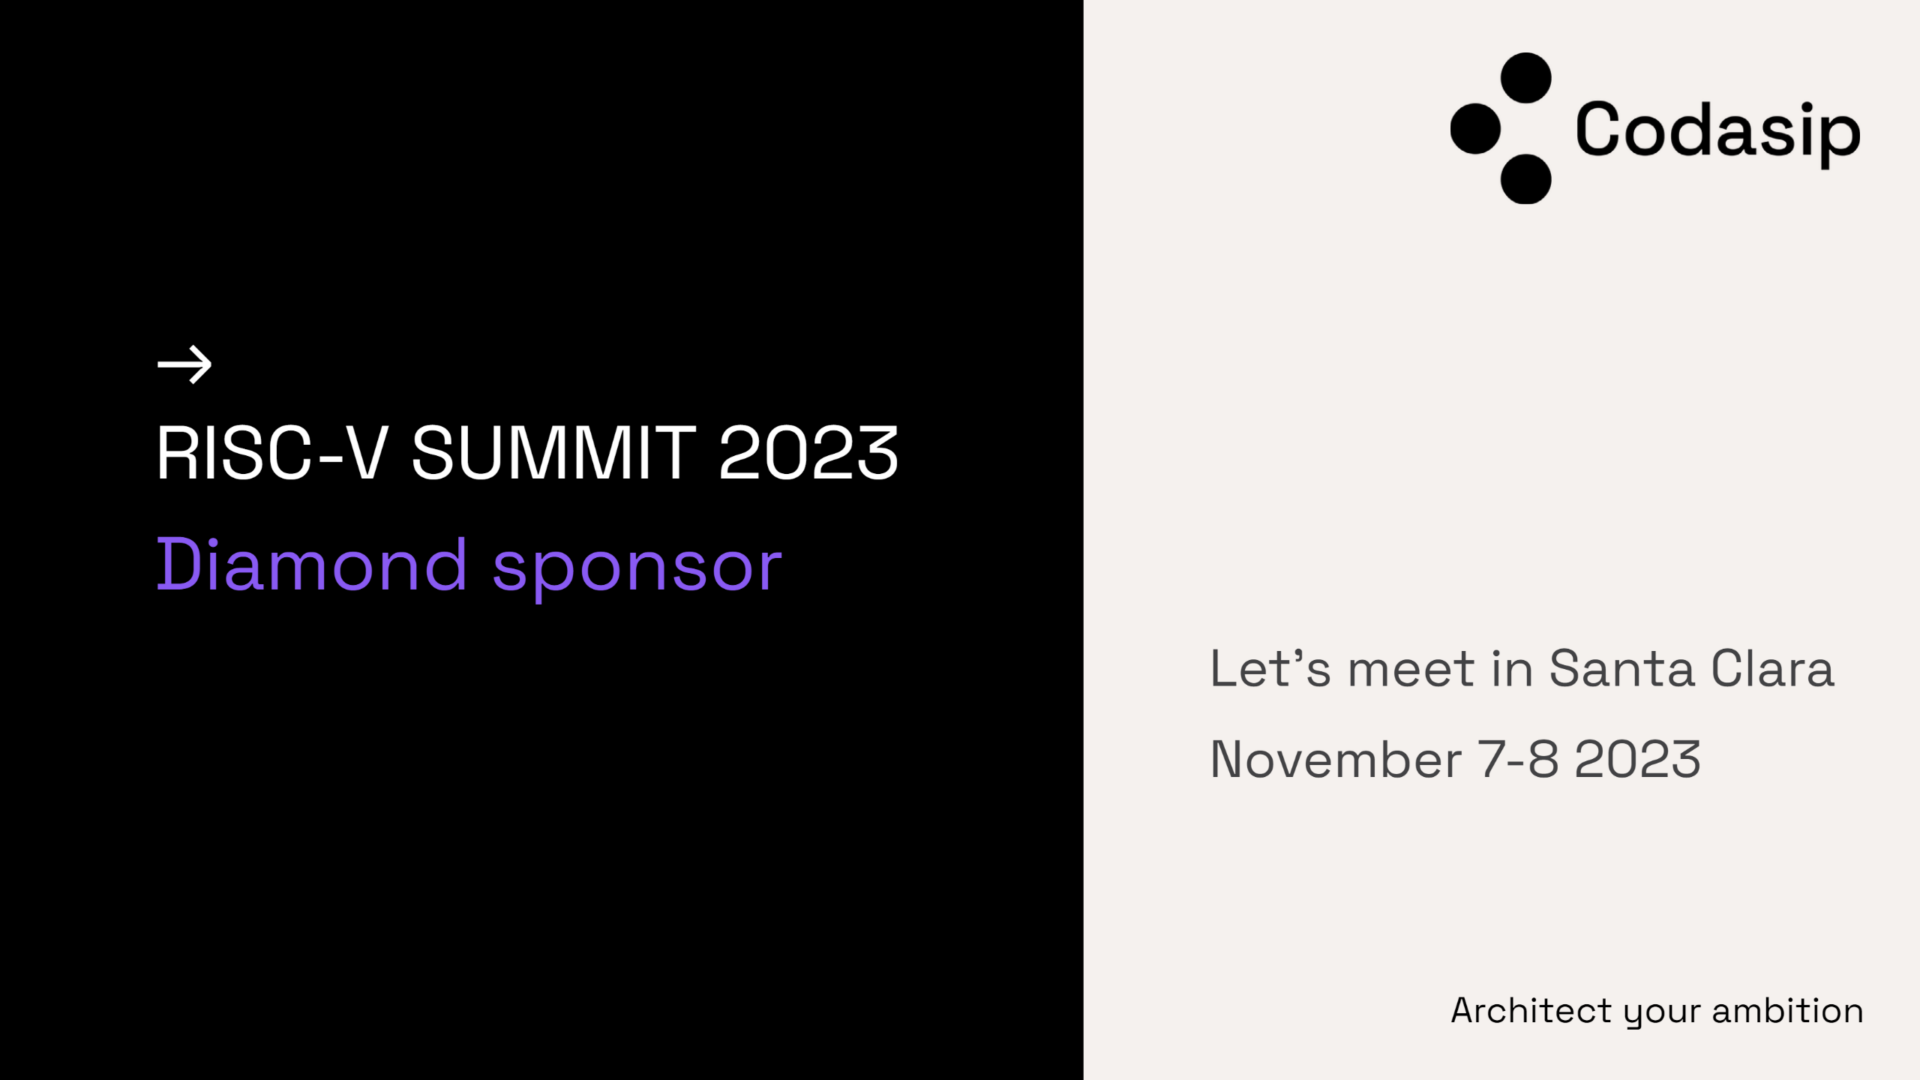 Codasip diamond sponsor of RISC-V summit 2023 in Santa Clara USA